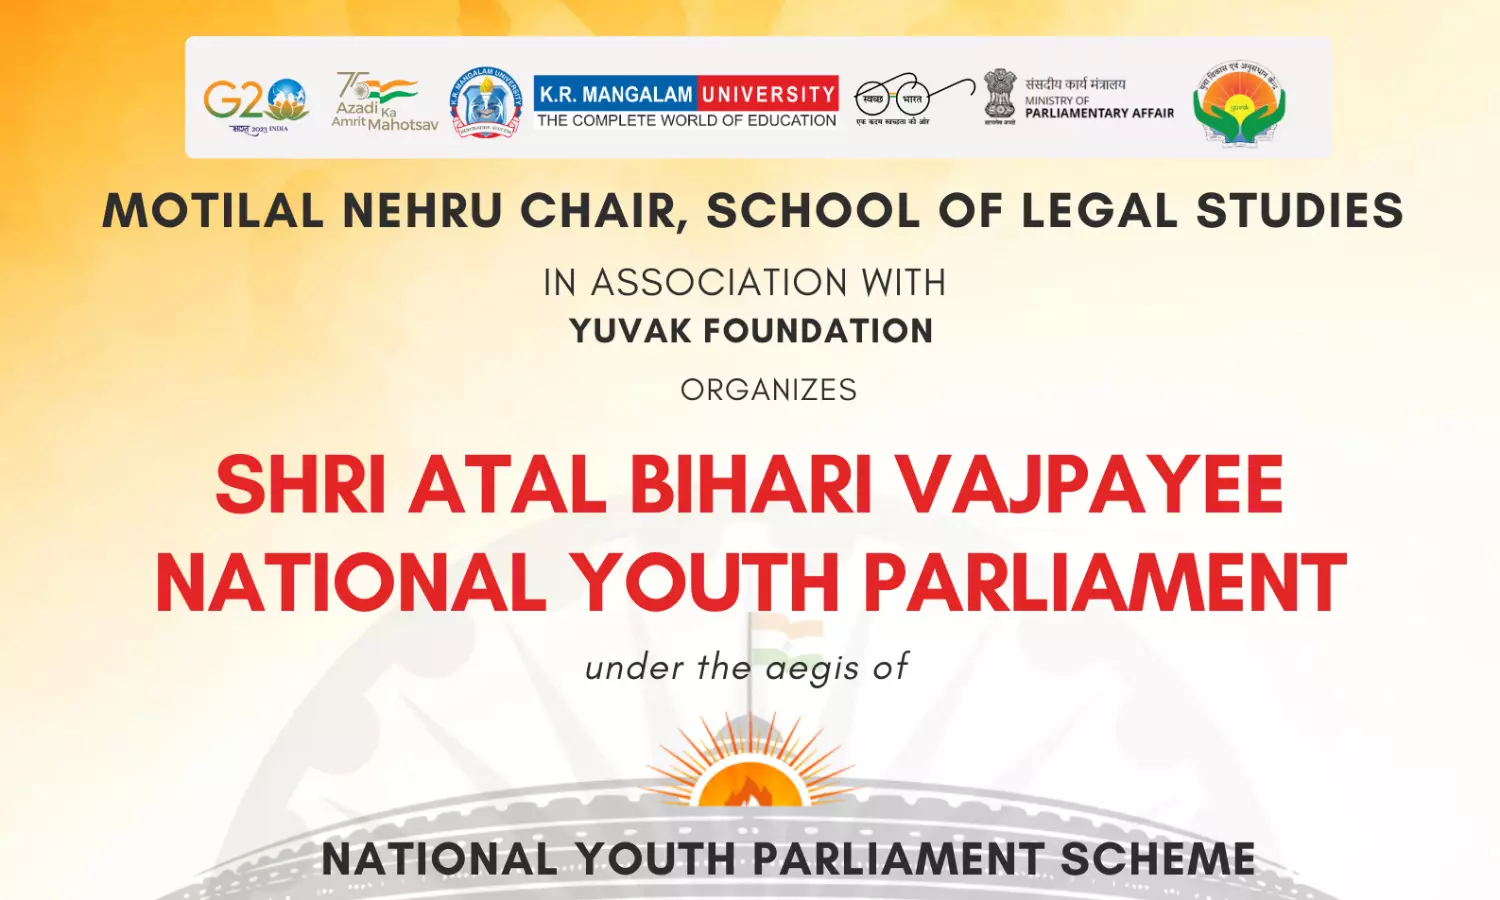 Shri Atal Bihari Vajpayee National Youth Parliament | Motilal Nehru Chair, School of Legal Studies, K.R. Mangalam University | Yuvak Foundation